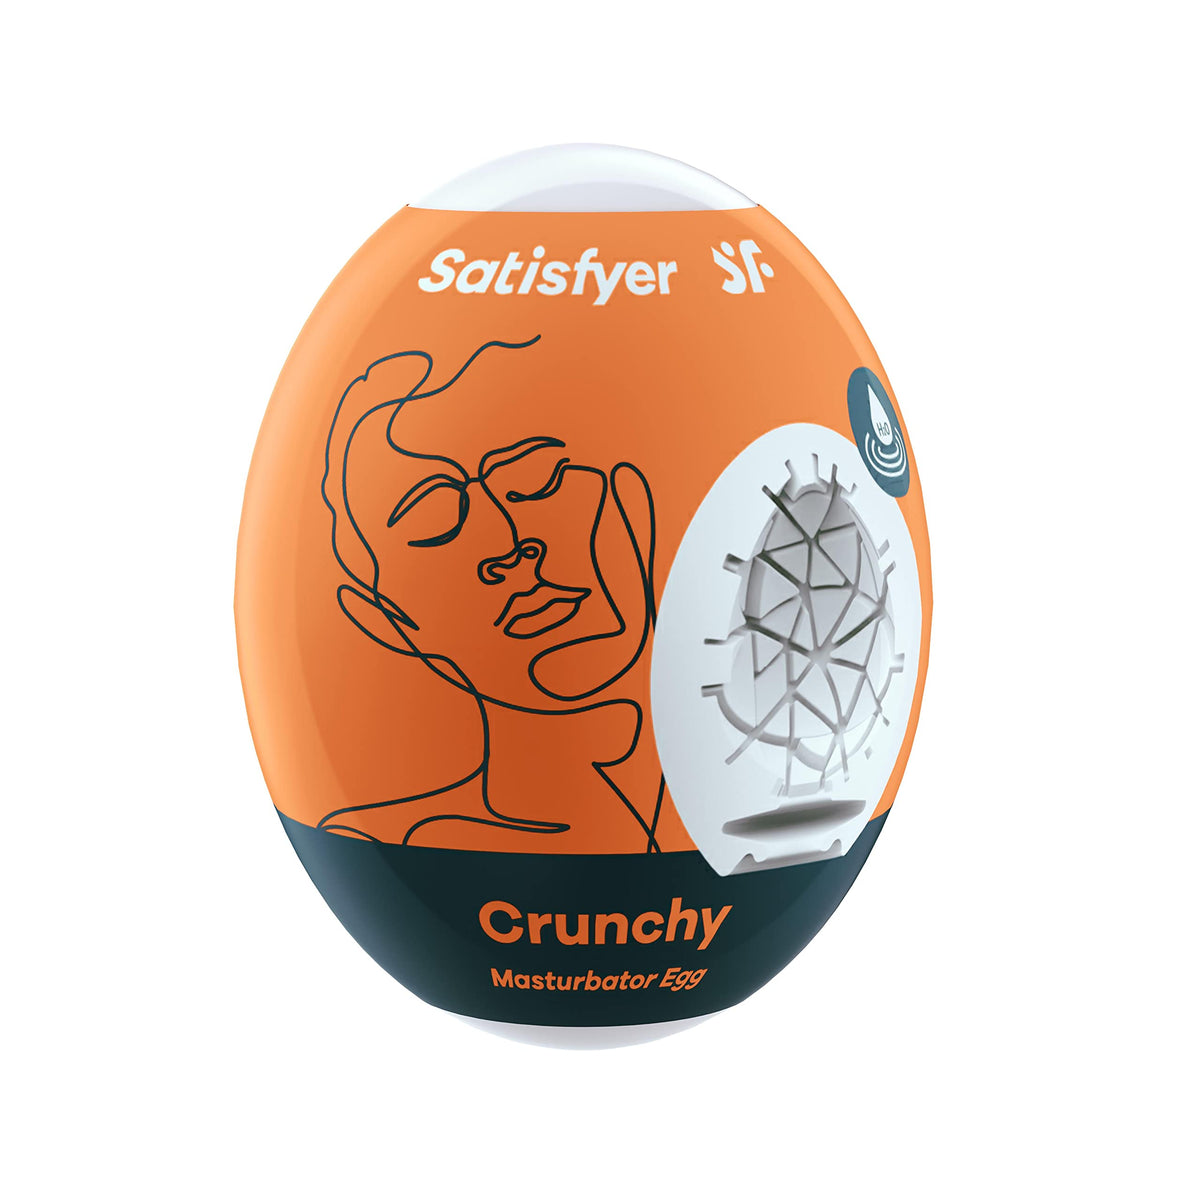 Satisfyer Masturbador Egg